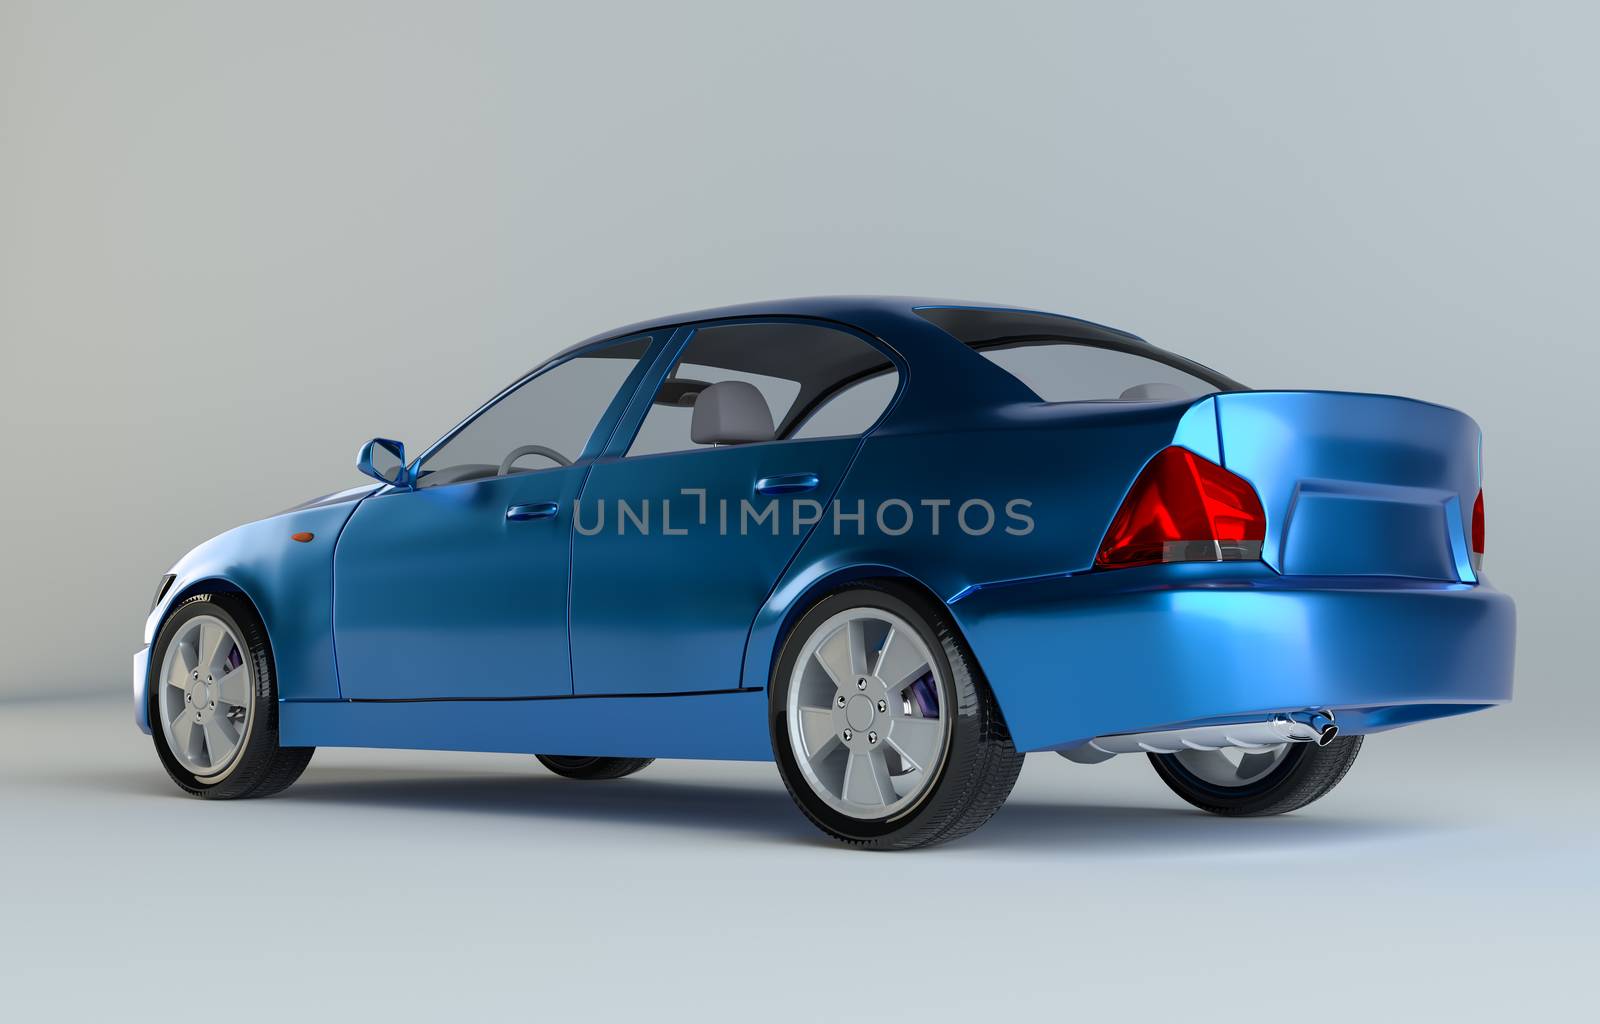 A CG render of a generic luxury blue sedan by cherezoff